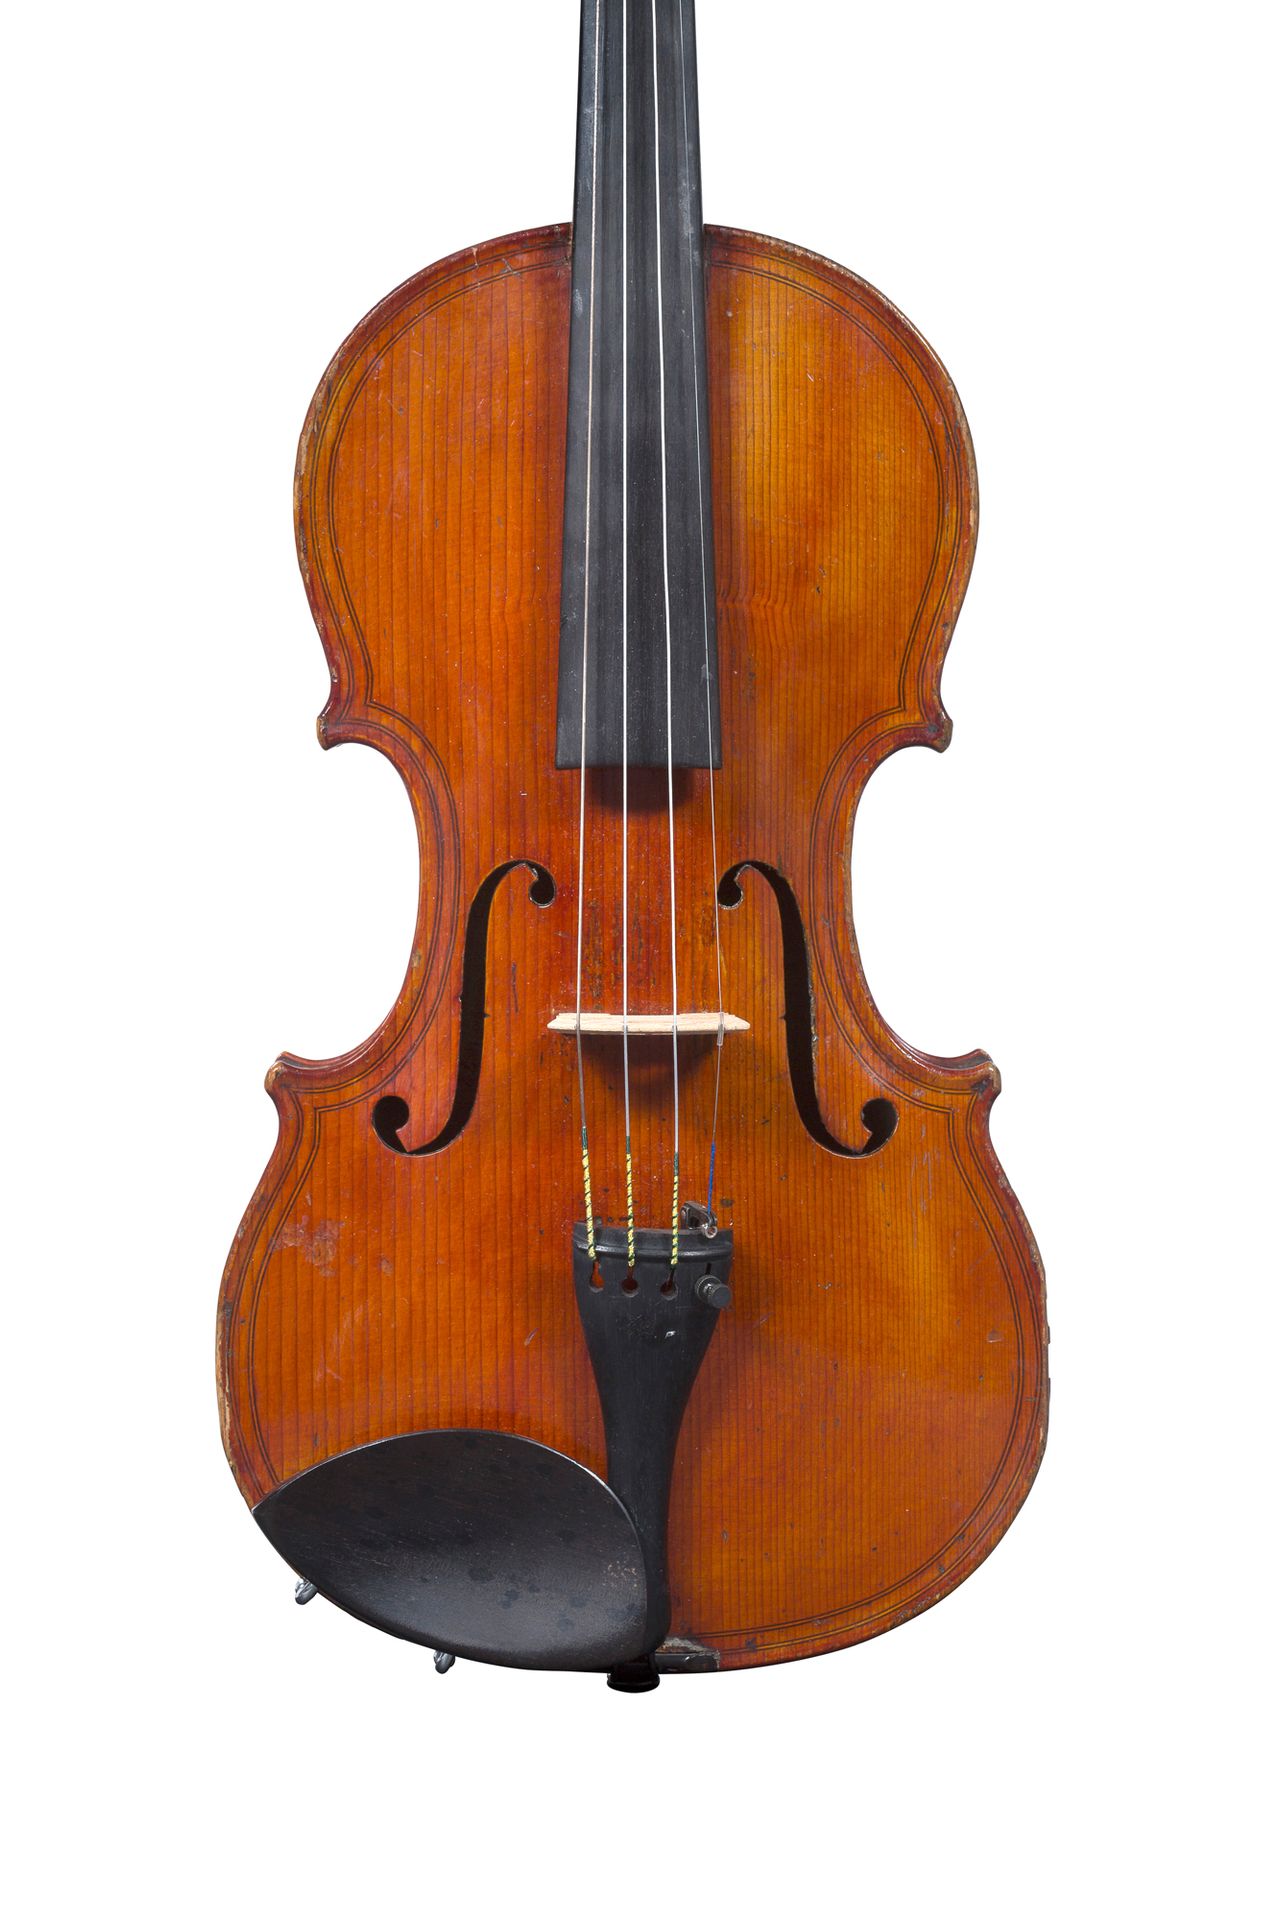 Null 尼古拉-莫尚的小提琴
大约1820-30年在米勒库尔制造
双弦琴模型，带有Nicolas Amati 1873的天书标签和纽扣附近的Nicolas M&hellip;